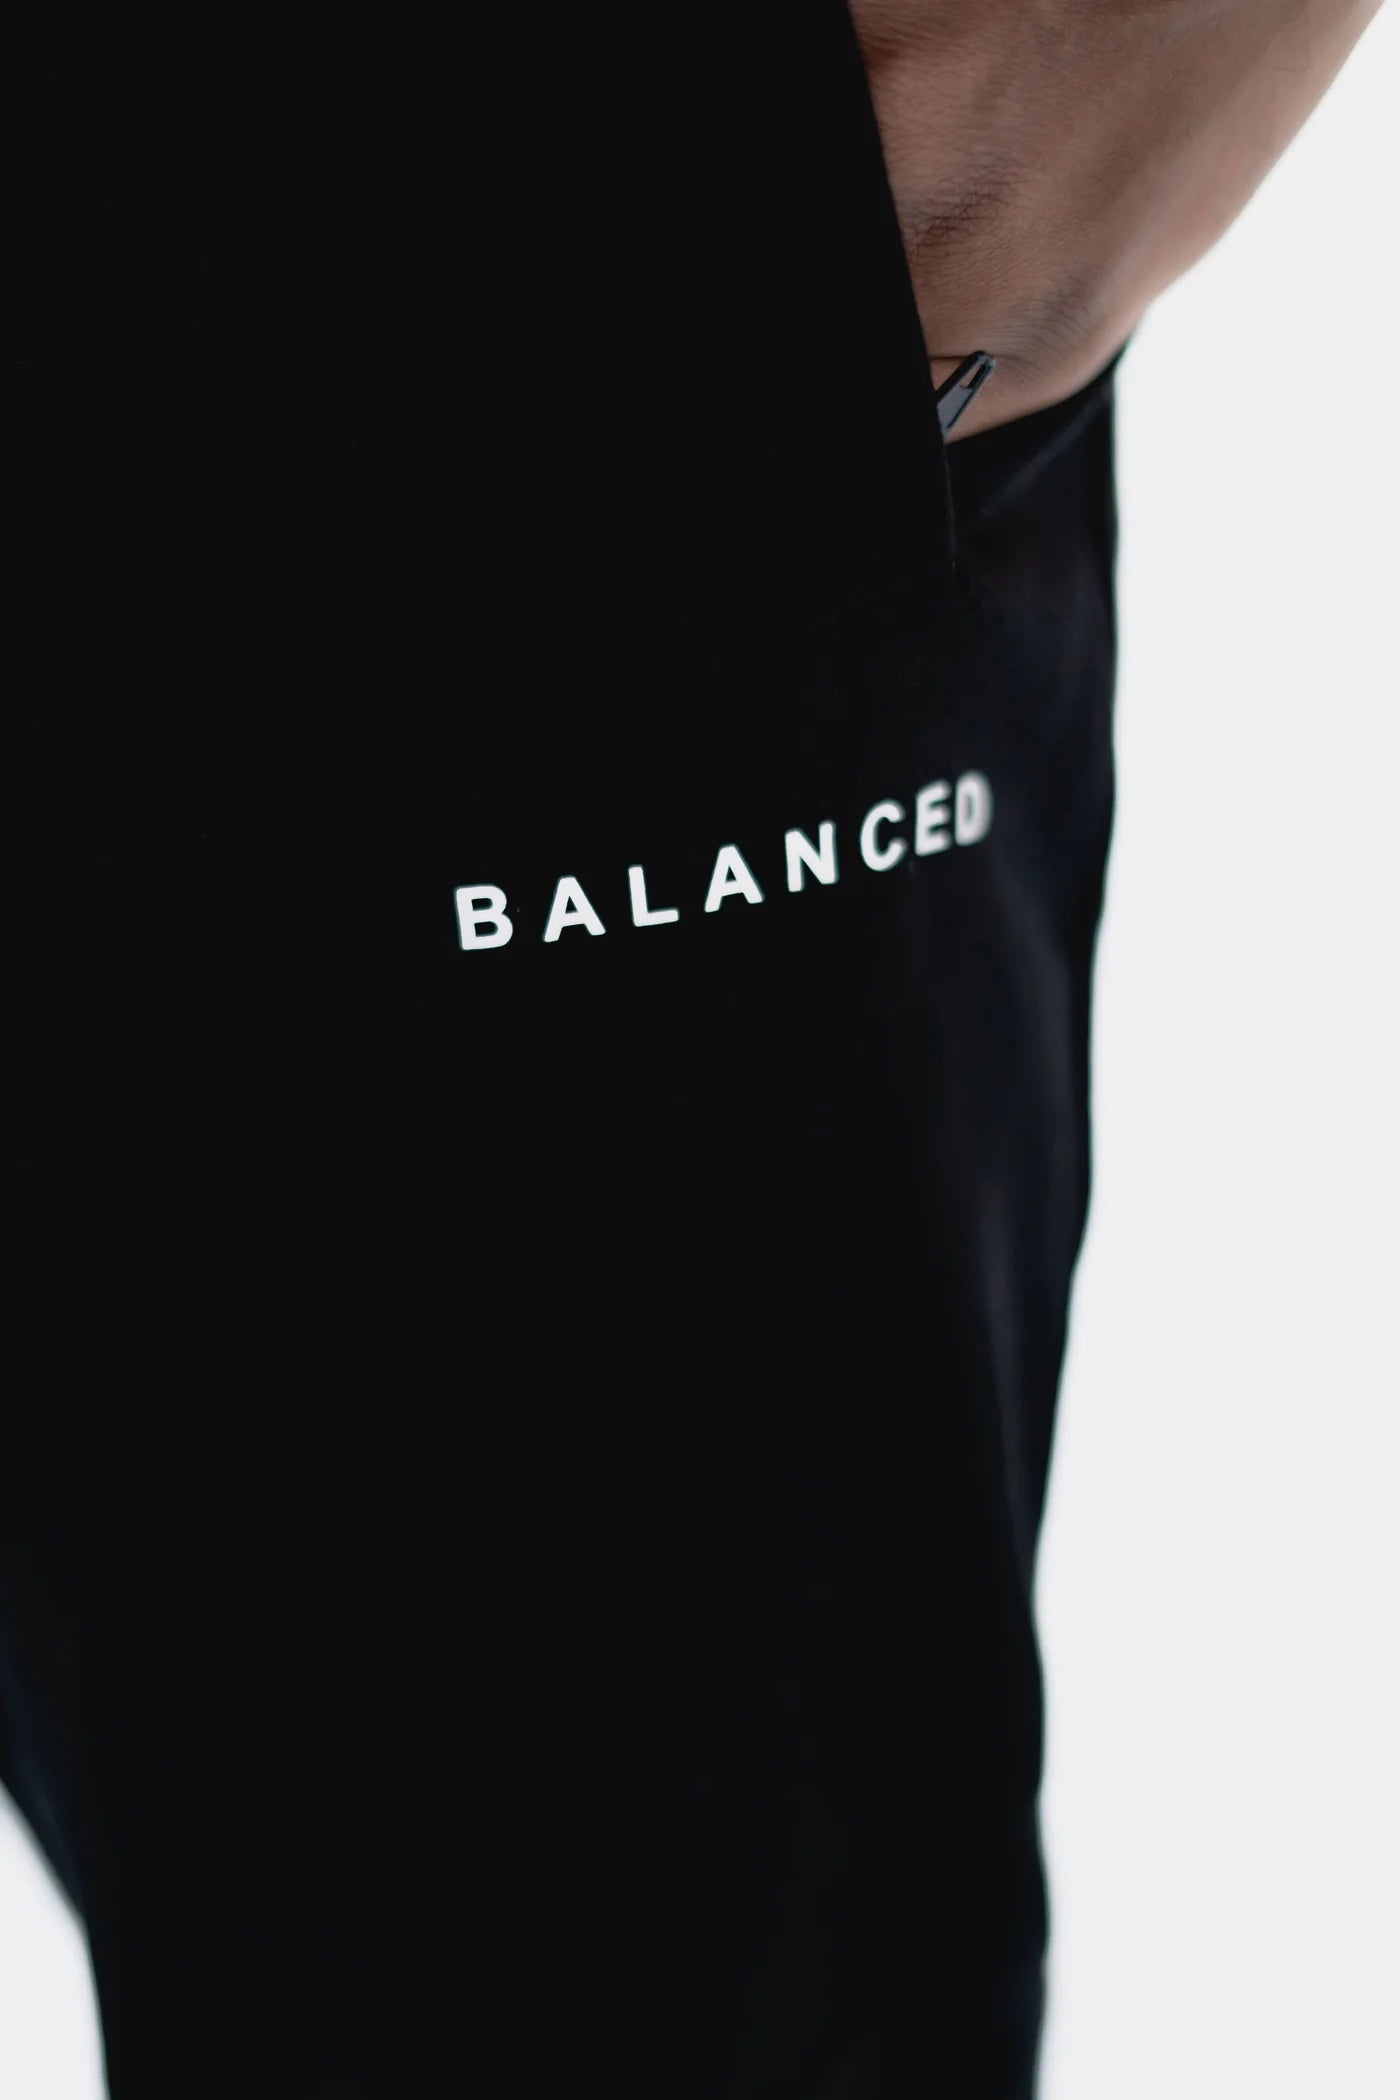 Balanced Aspire Jogger pants in black